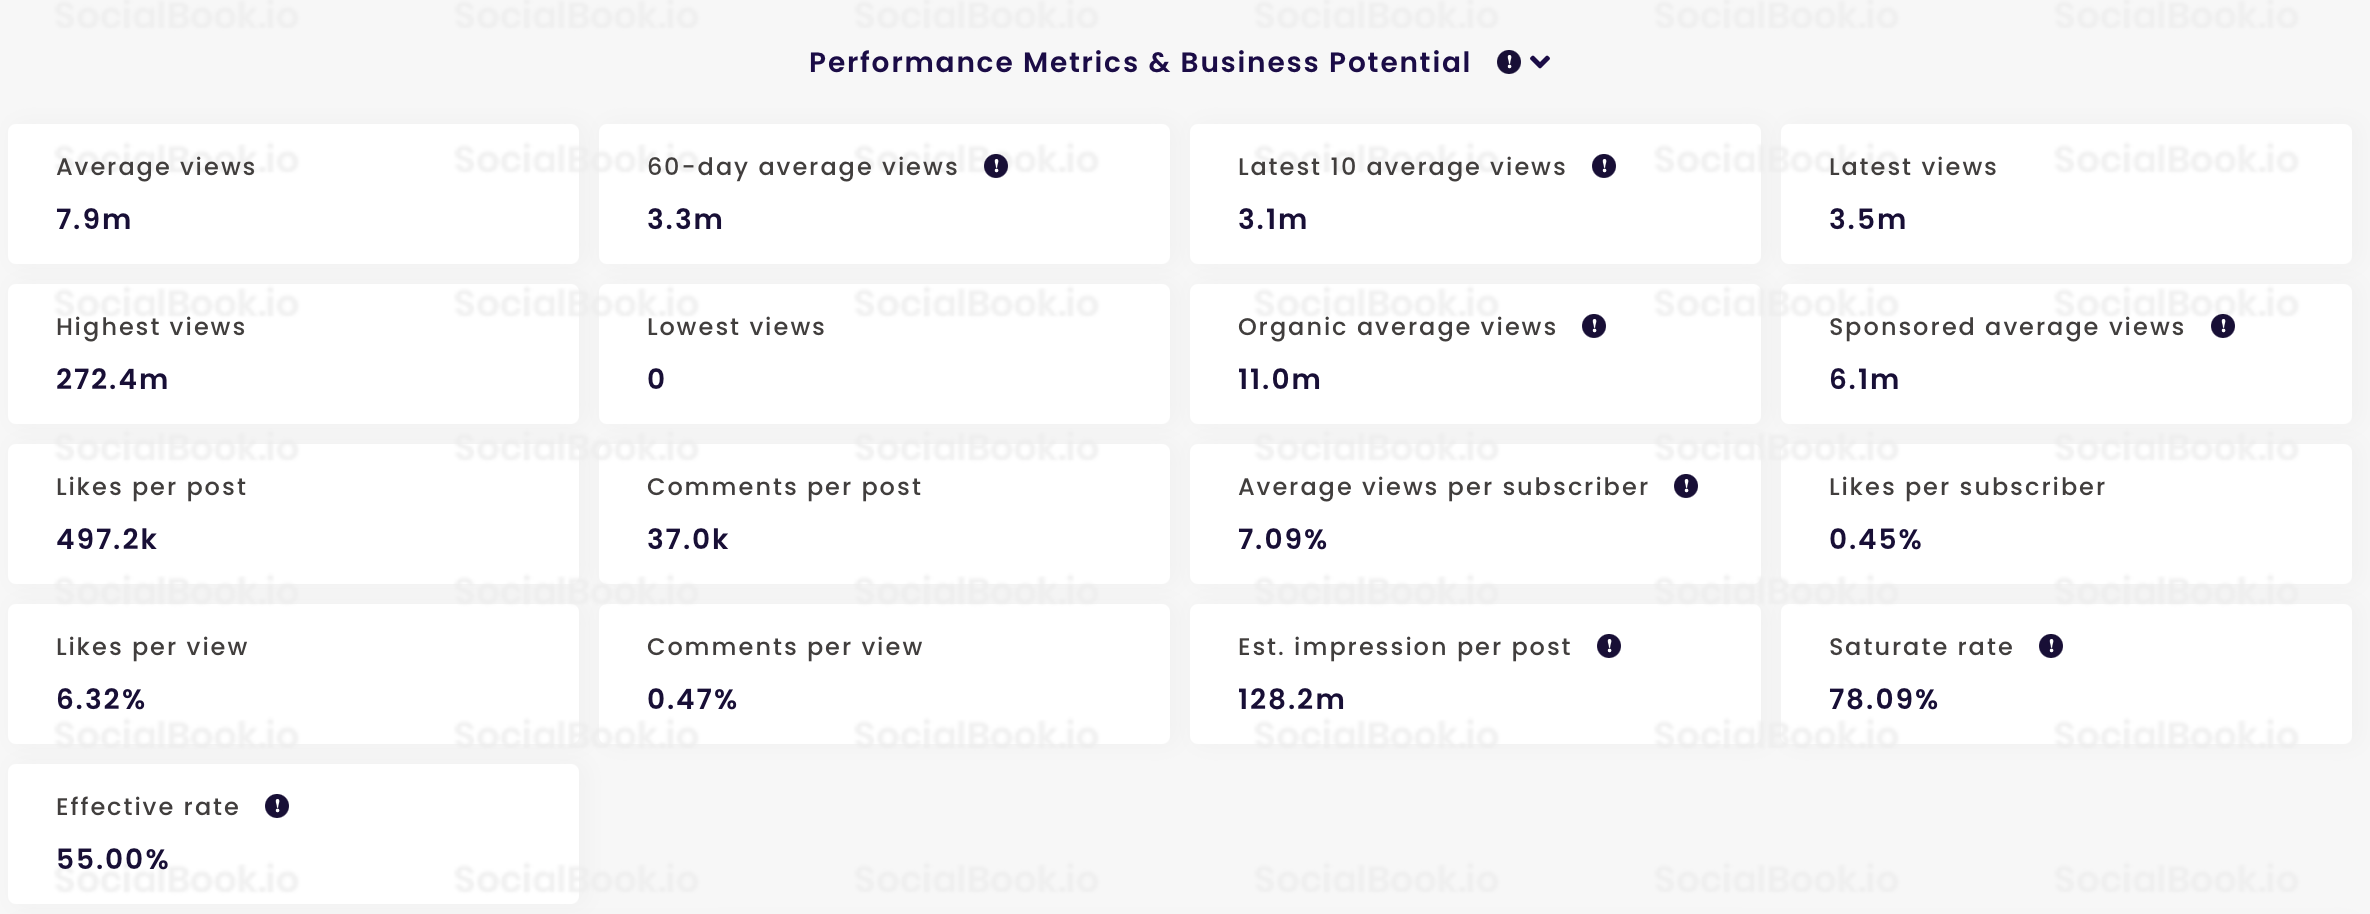 Performance Metrics & Business Potential